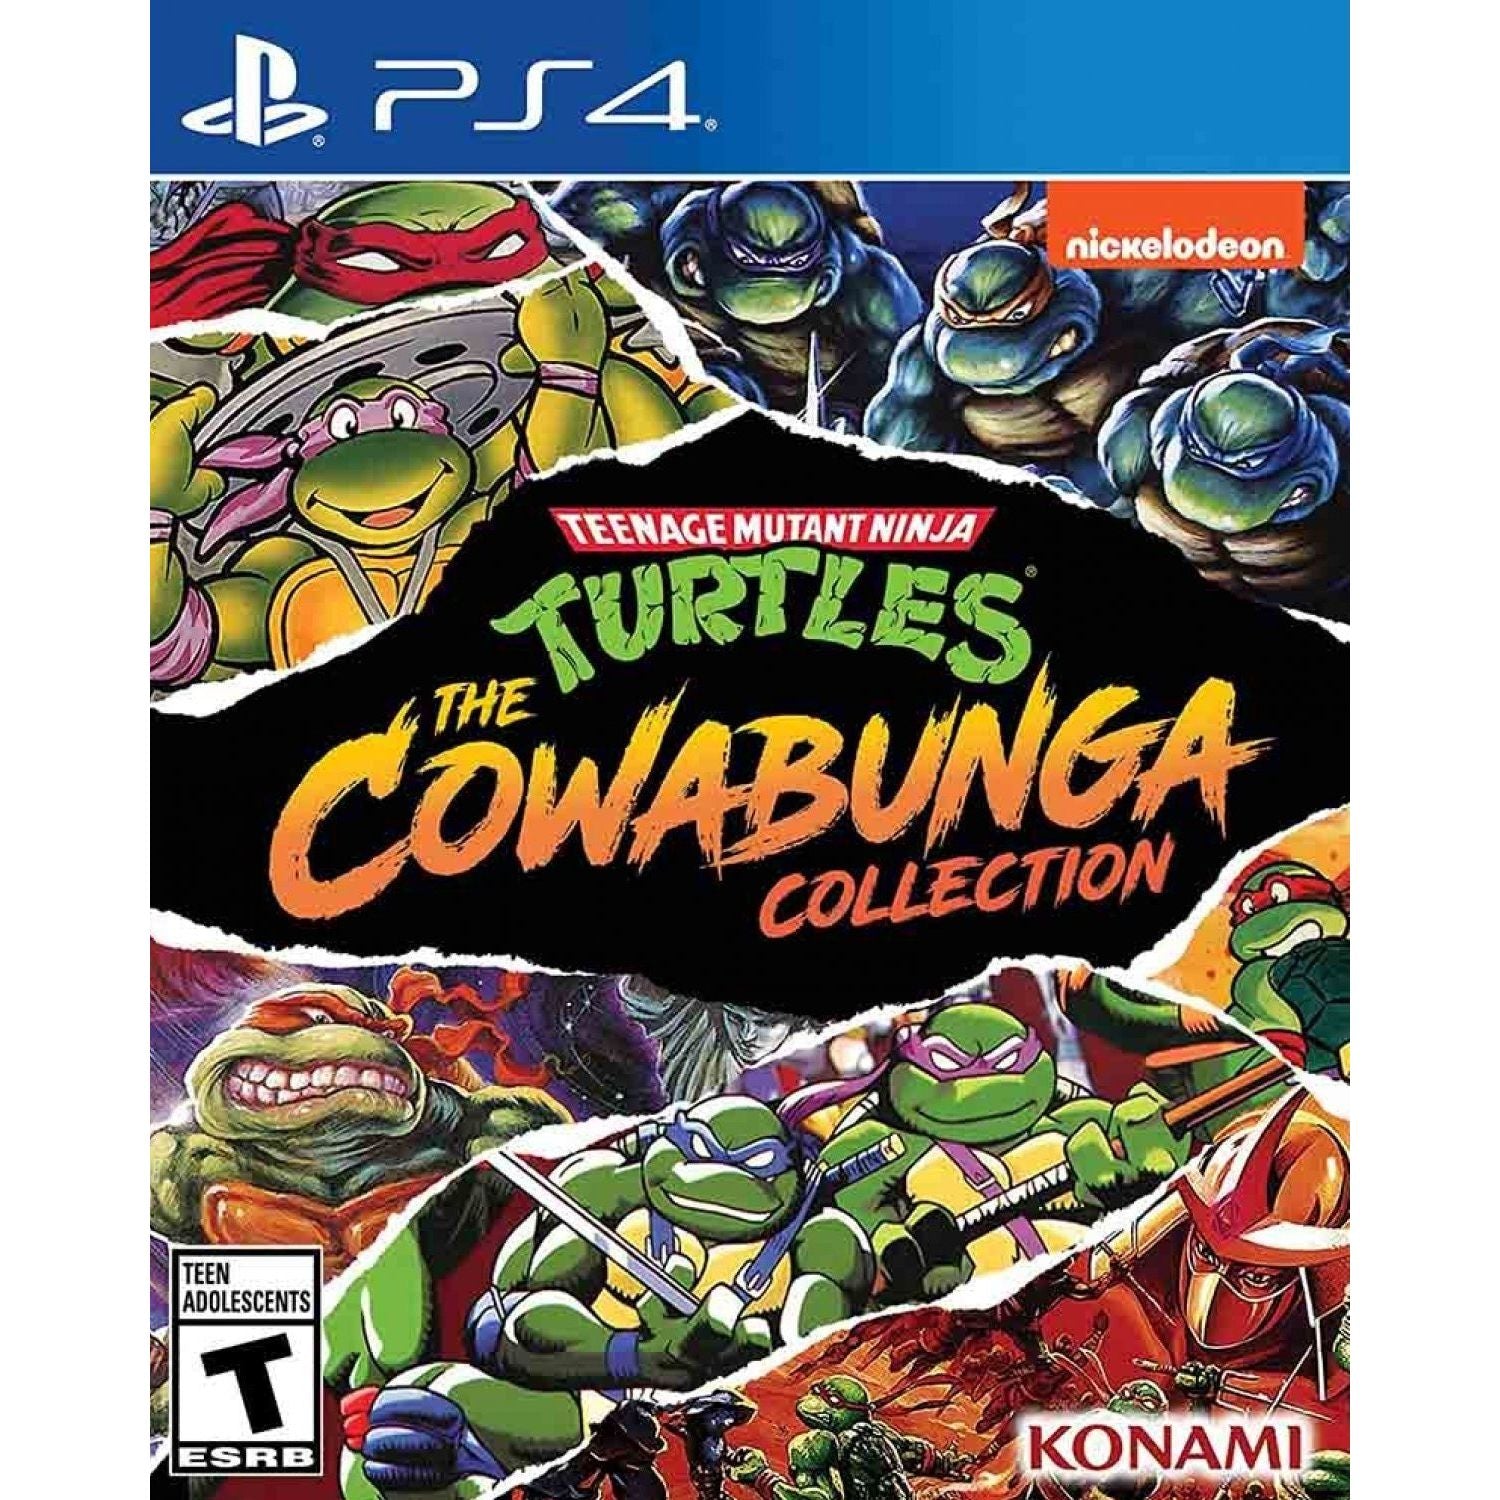 PS4 - Teenage Mutant Ninja Turtles La Collection Cowabunga